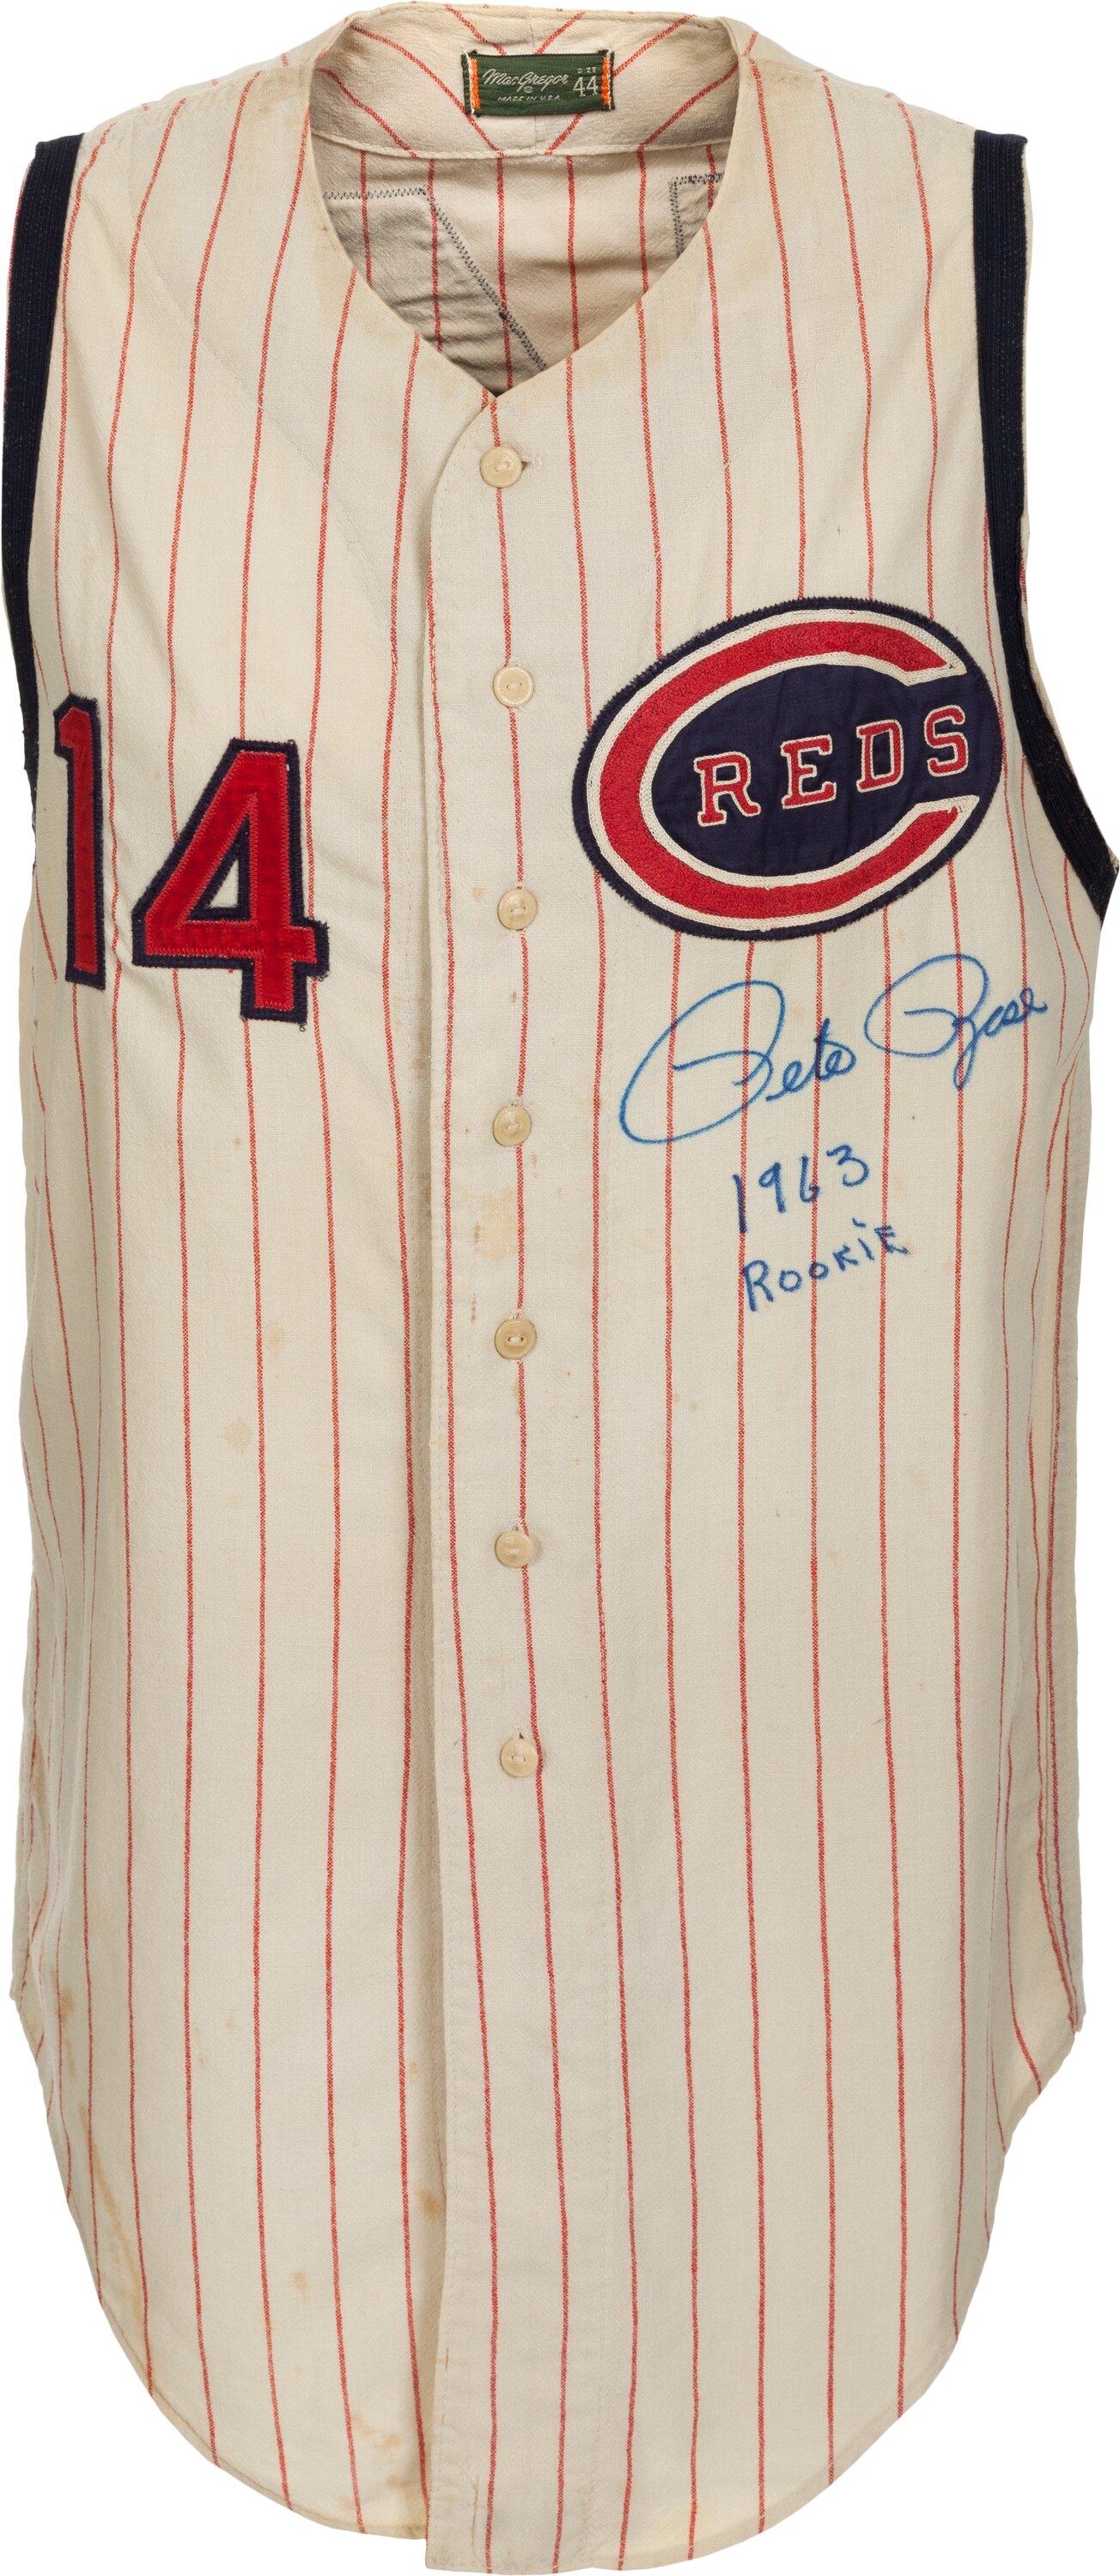 1963-64 Pete Rose Game Worn Cincinnati Reds Rookie-Era Jersey